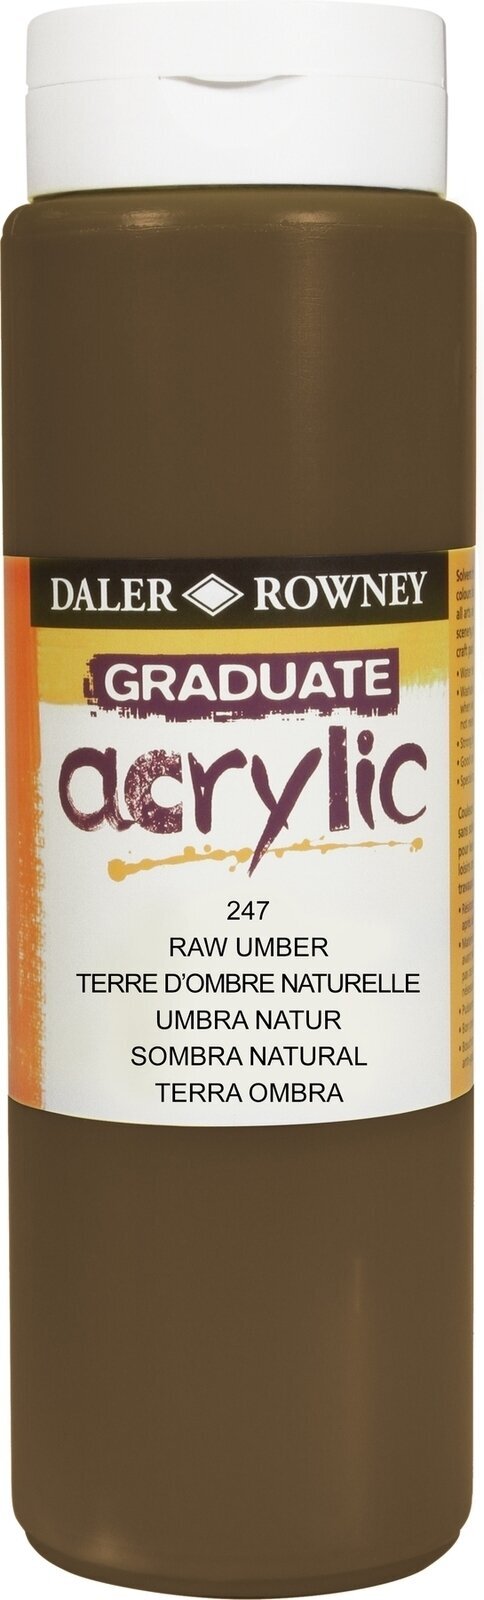 Akrylmaling Daler Rowney Graduate Akrylmaling Raw Umber 500 ml 1 stk.